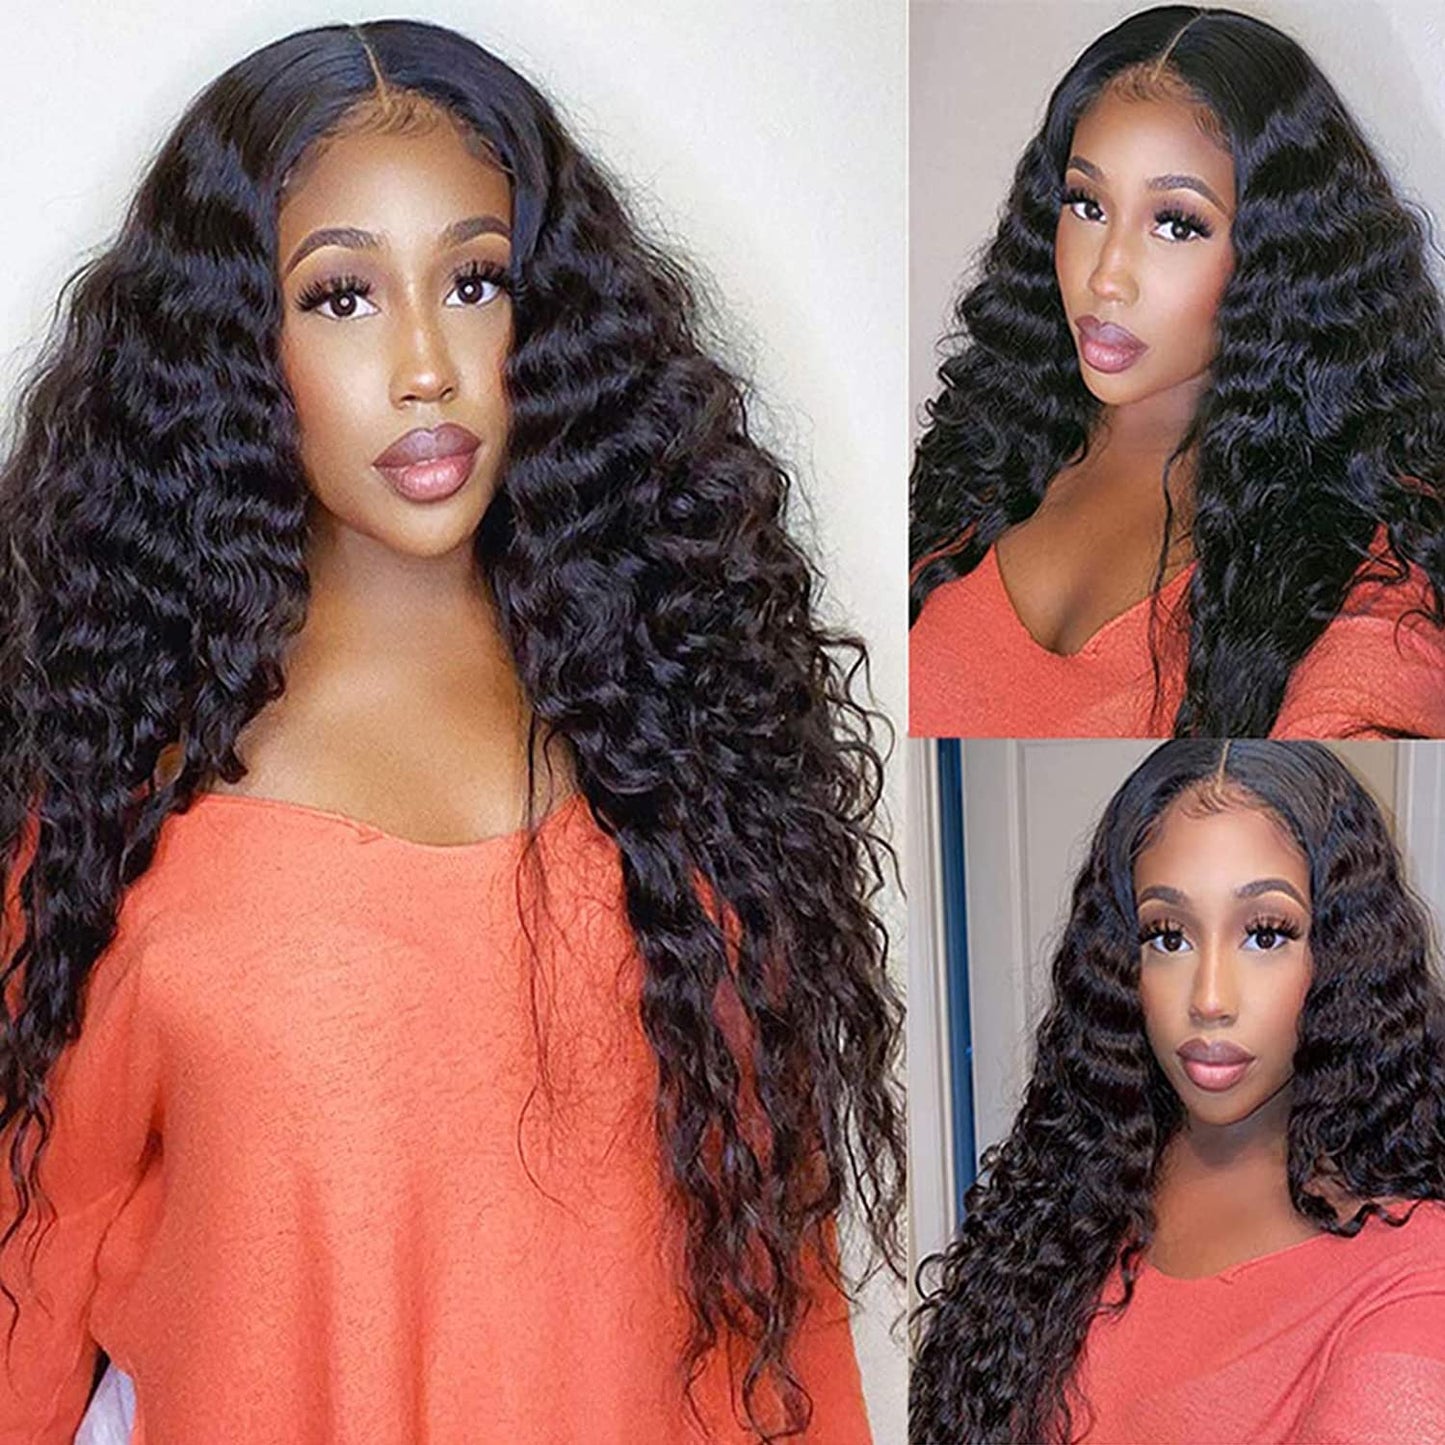 Professional Title: "Premium HD Transparent Lace Front Human Hair Wig - 4X4 Deep Wave Brazilian Virgin Hair, 180% Density, Lace Closure, Natural Color - Ideal for Black Women (18 Inch, Deep Wave)"